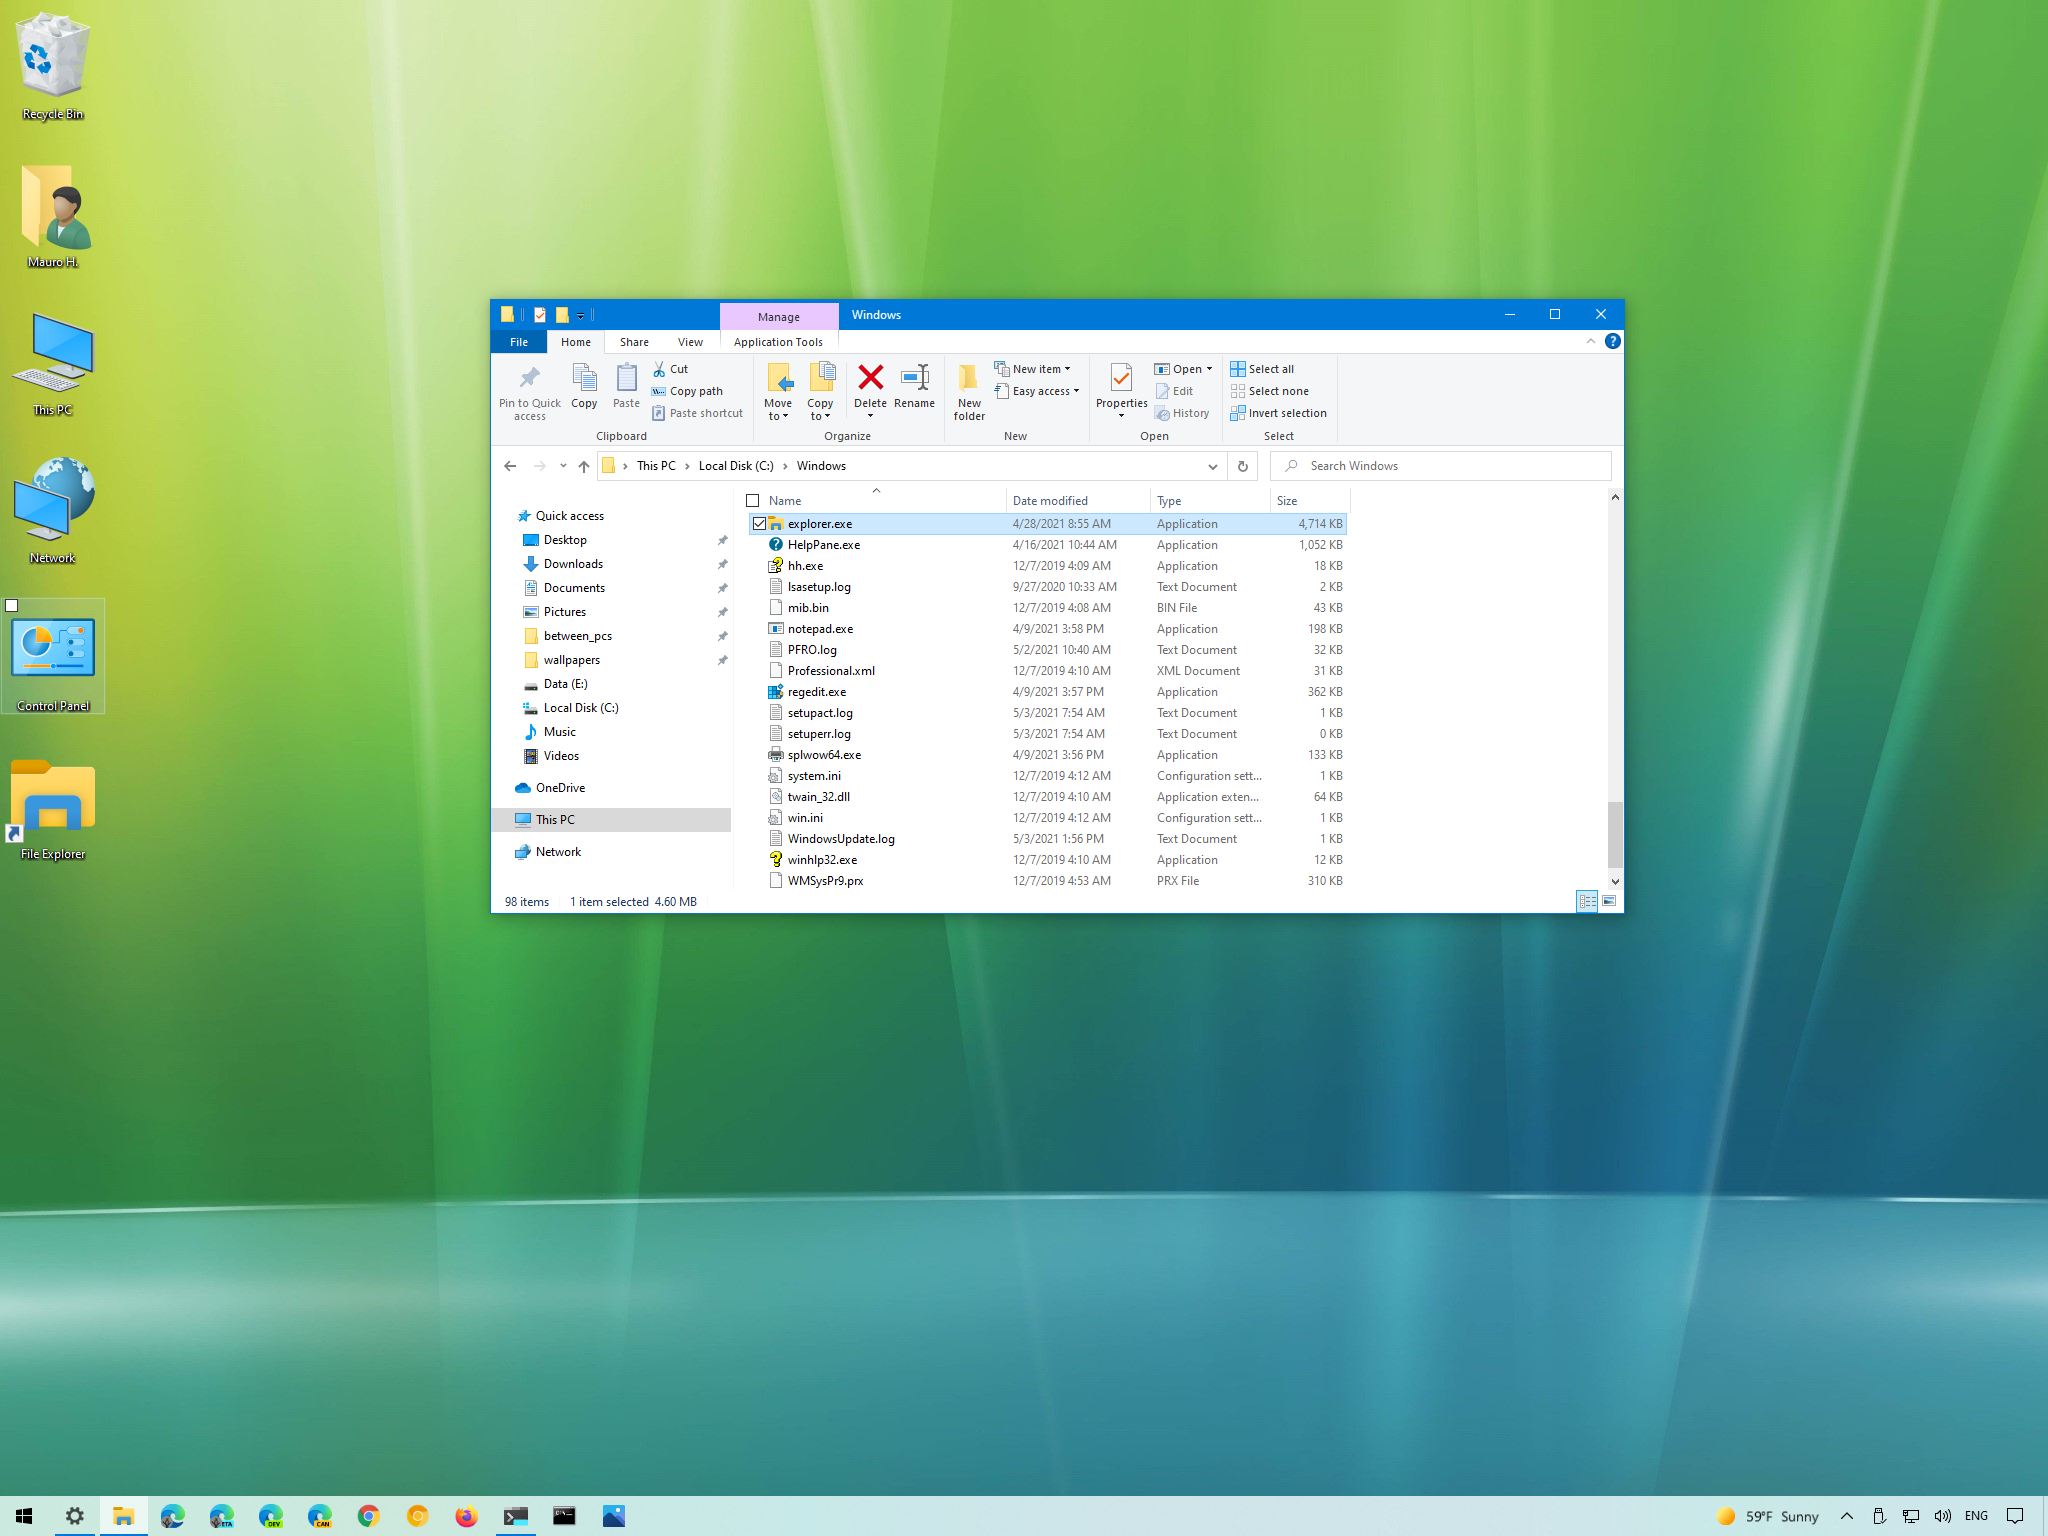 Open File Explorer or Windows Explorer.
C:Program Files